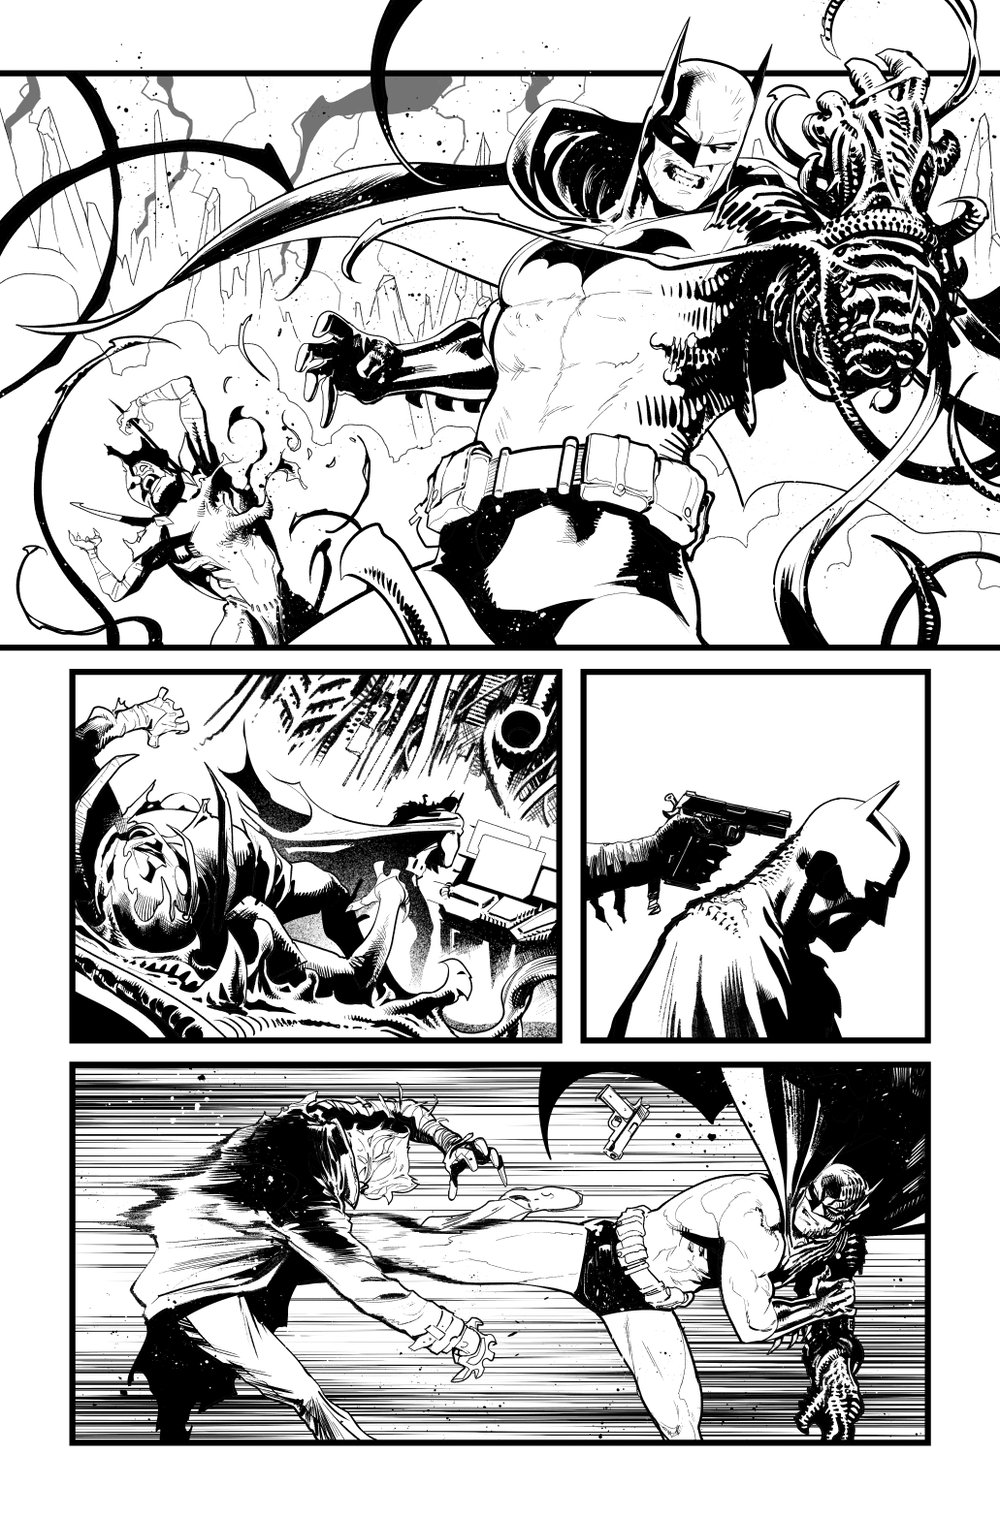 Image of BATMAN/SUPERMAN #5 p.14 ARTIST'S PROOF